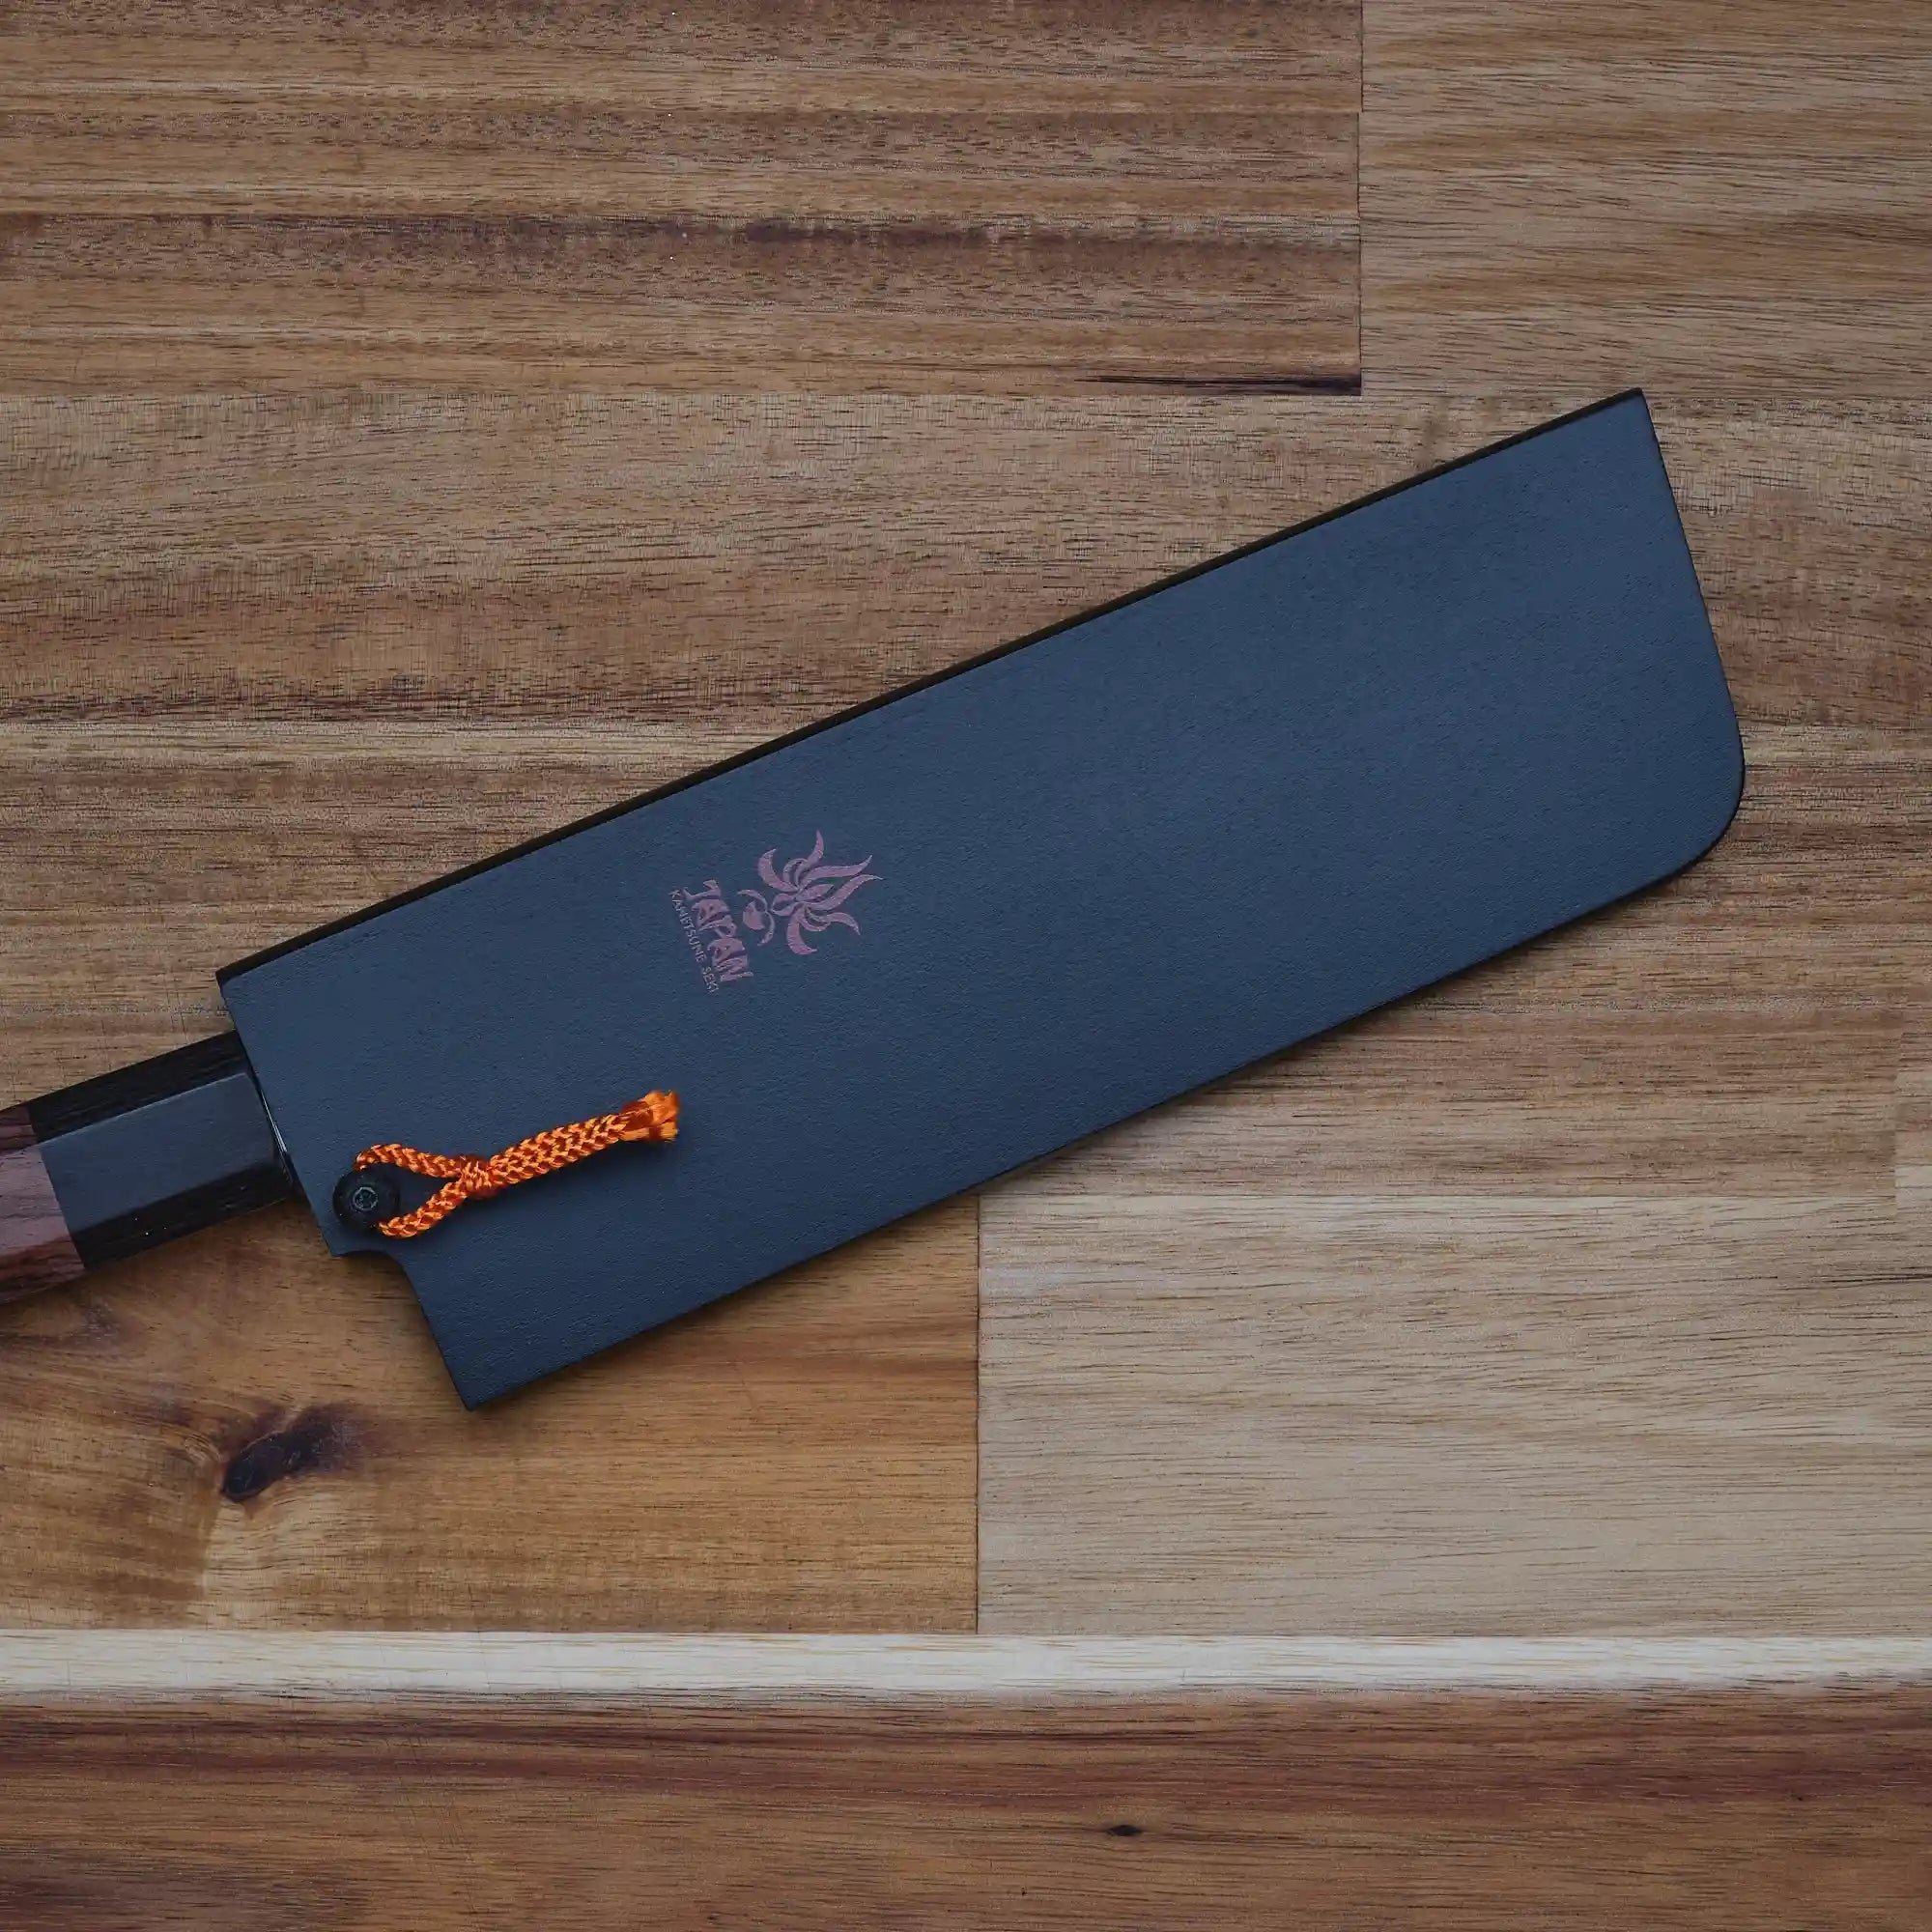 Sheath / Saya Ho Wood (Magnolia) - For Nakiri 165mm Knife